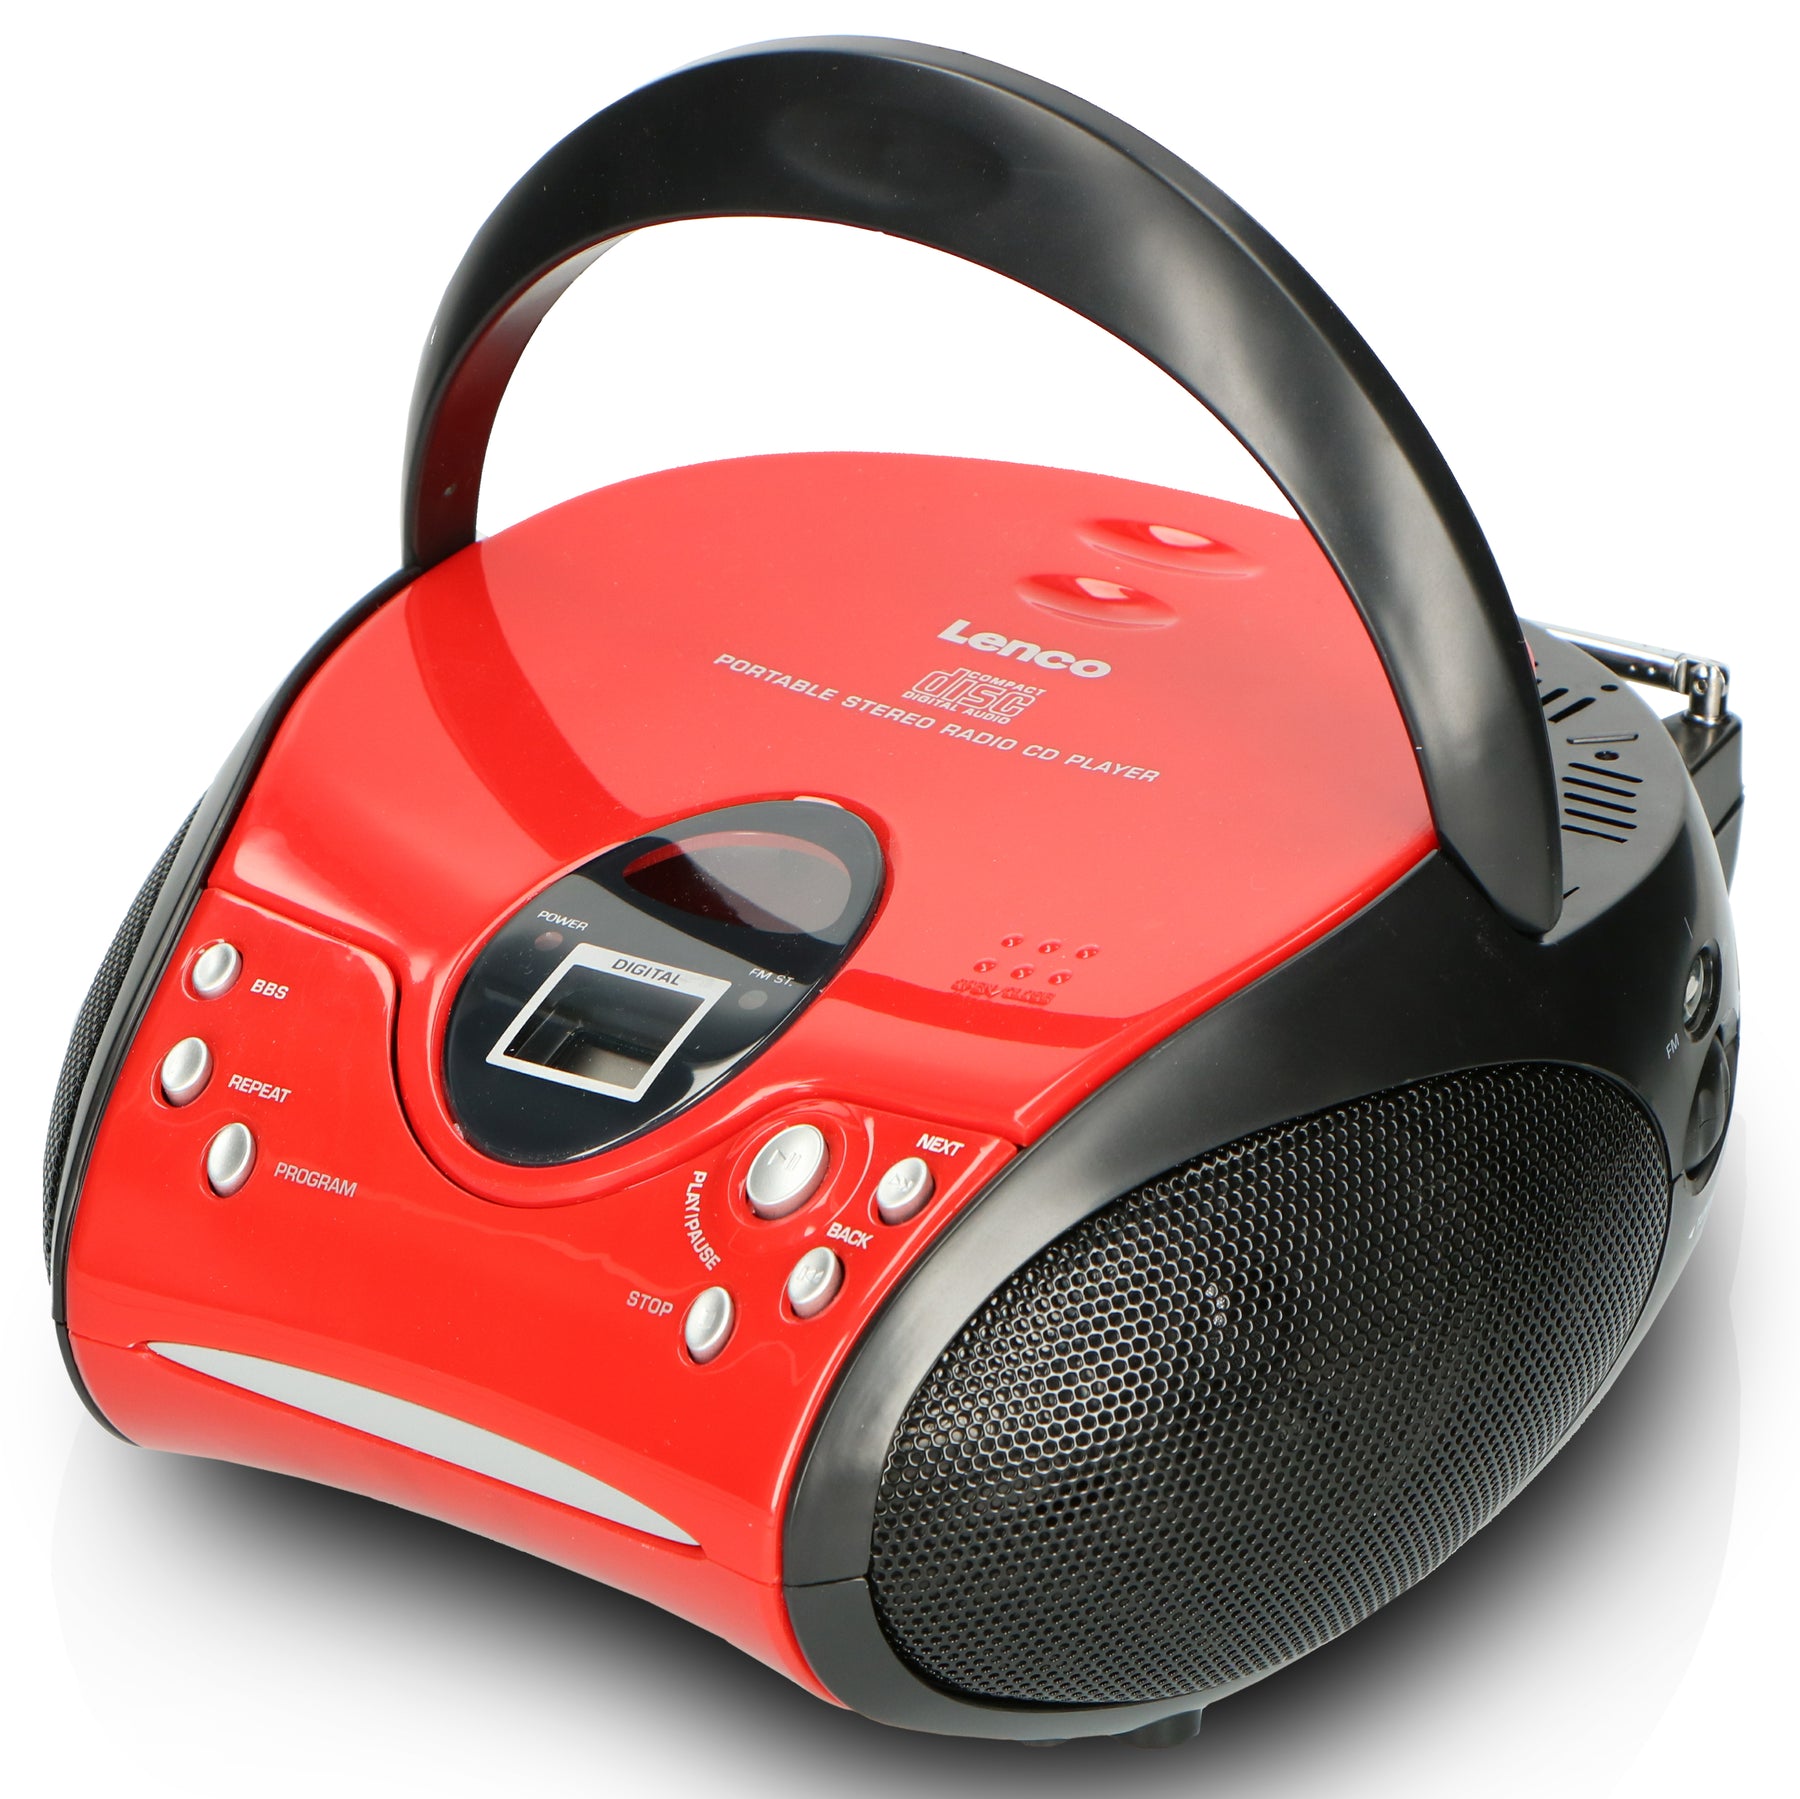 LENCO SCD-24 Red/Black - Portable stereo FM radio with CD player - Red –  Lenco-Catalog